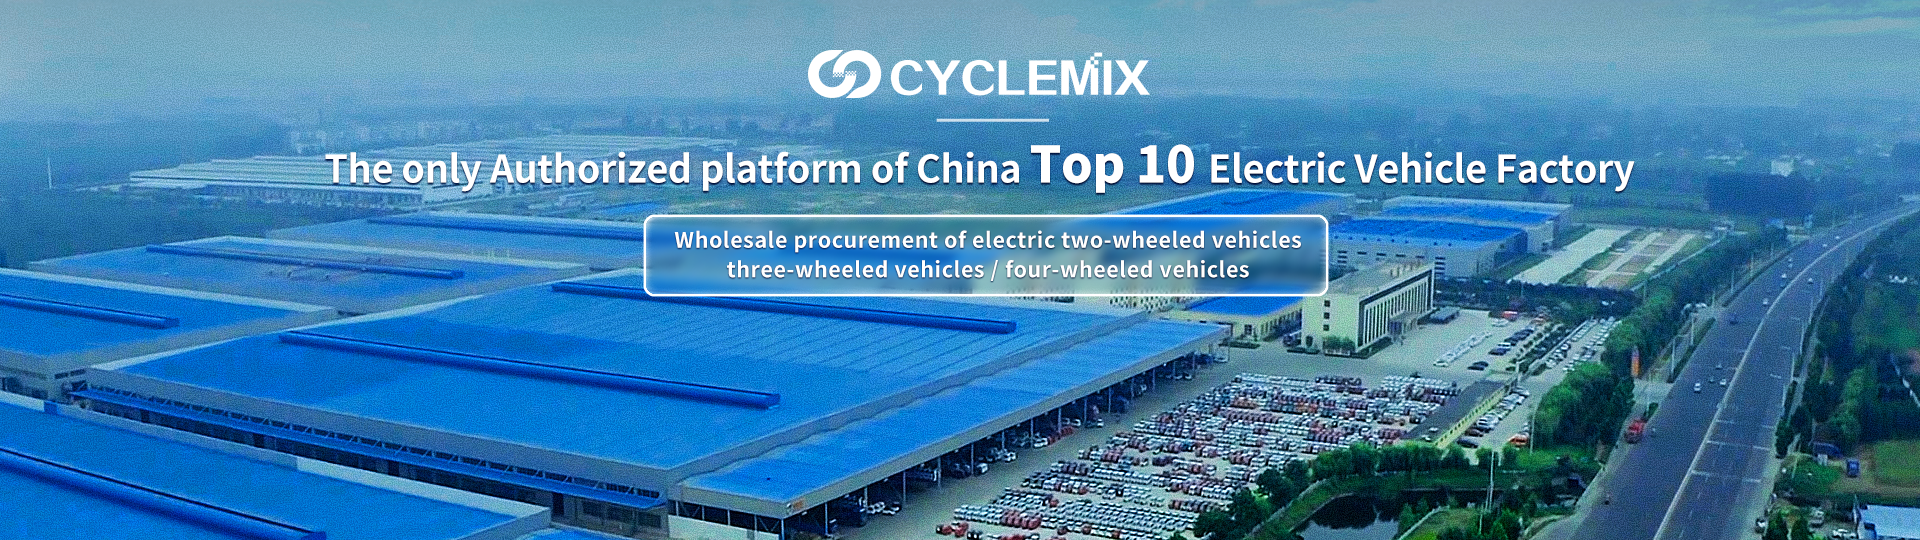 CYCLEMIX A única parte/plataforma autorizada da China Top 10 Electric Vehicle Factory